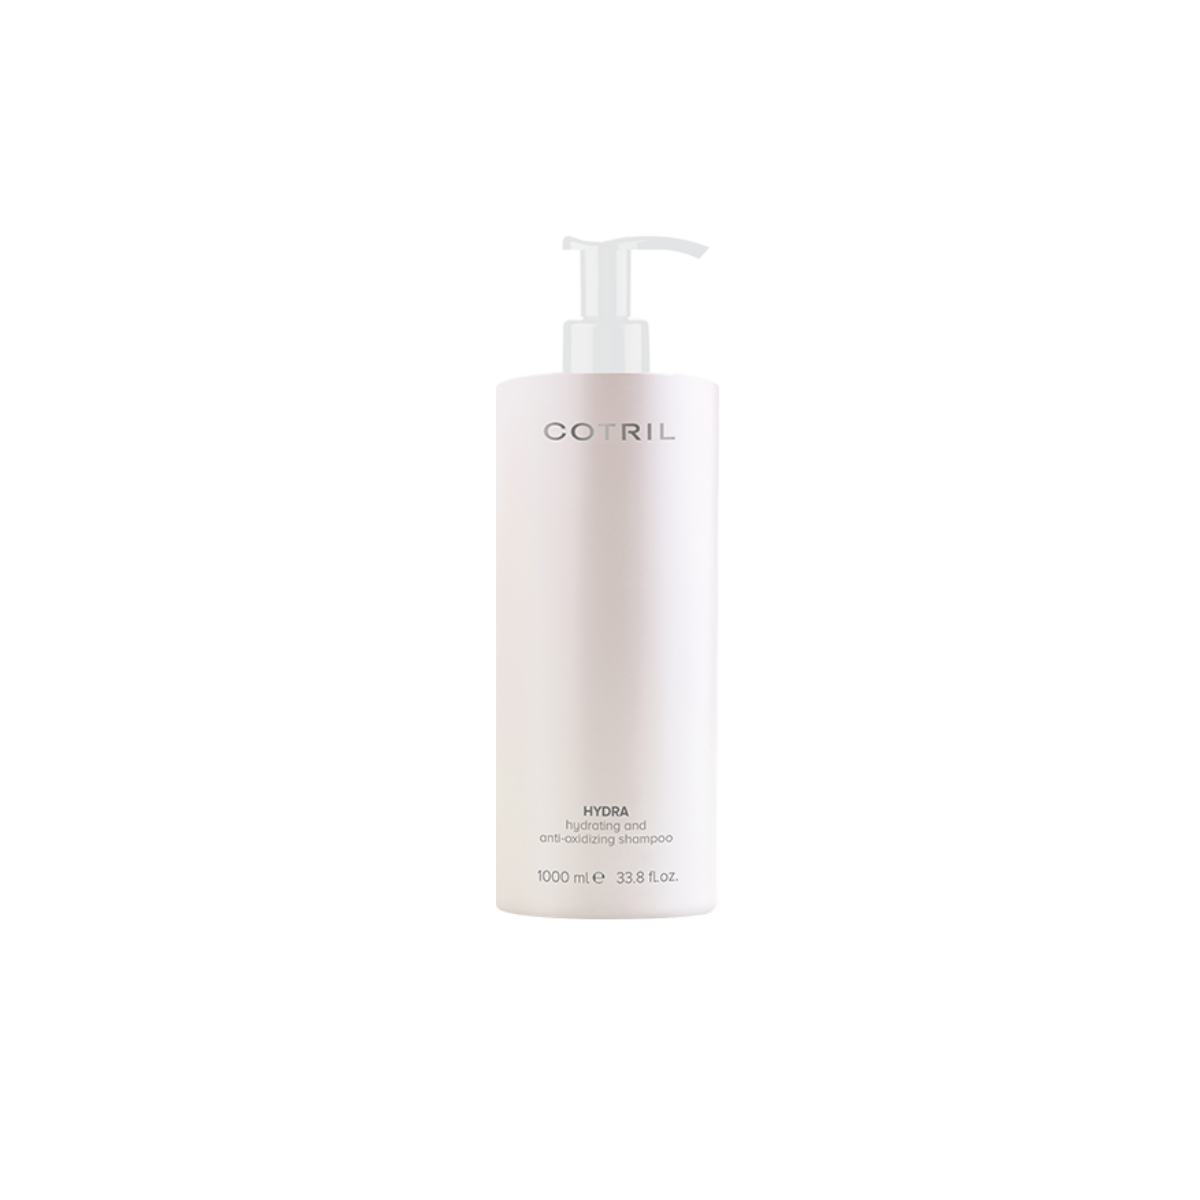 COTRIL - HYDRA - Hydrating and Anti-Oxidizing Shampoo (1000ml) Shampoo idratante